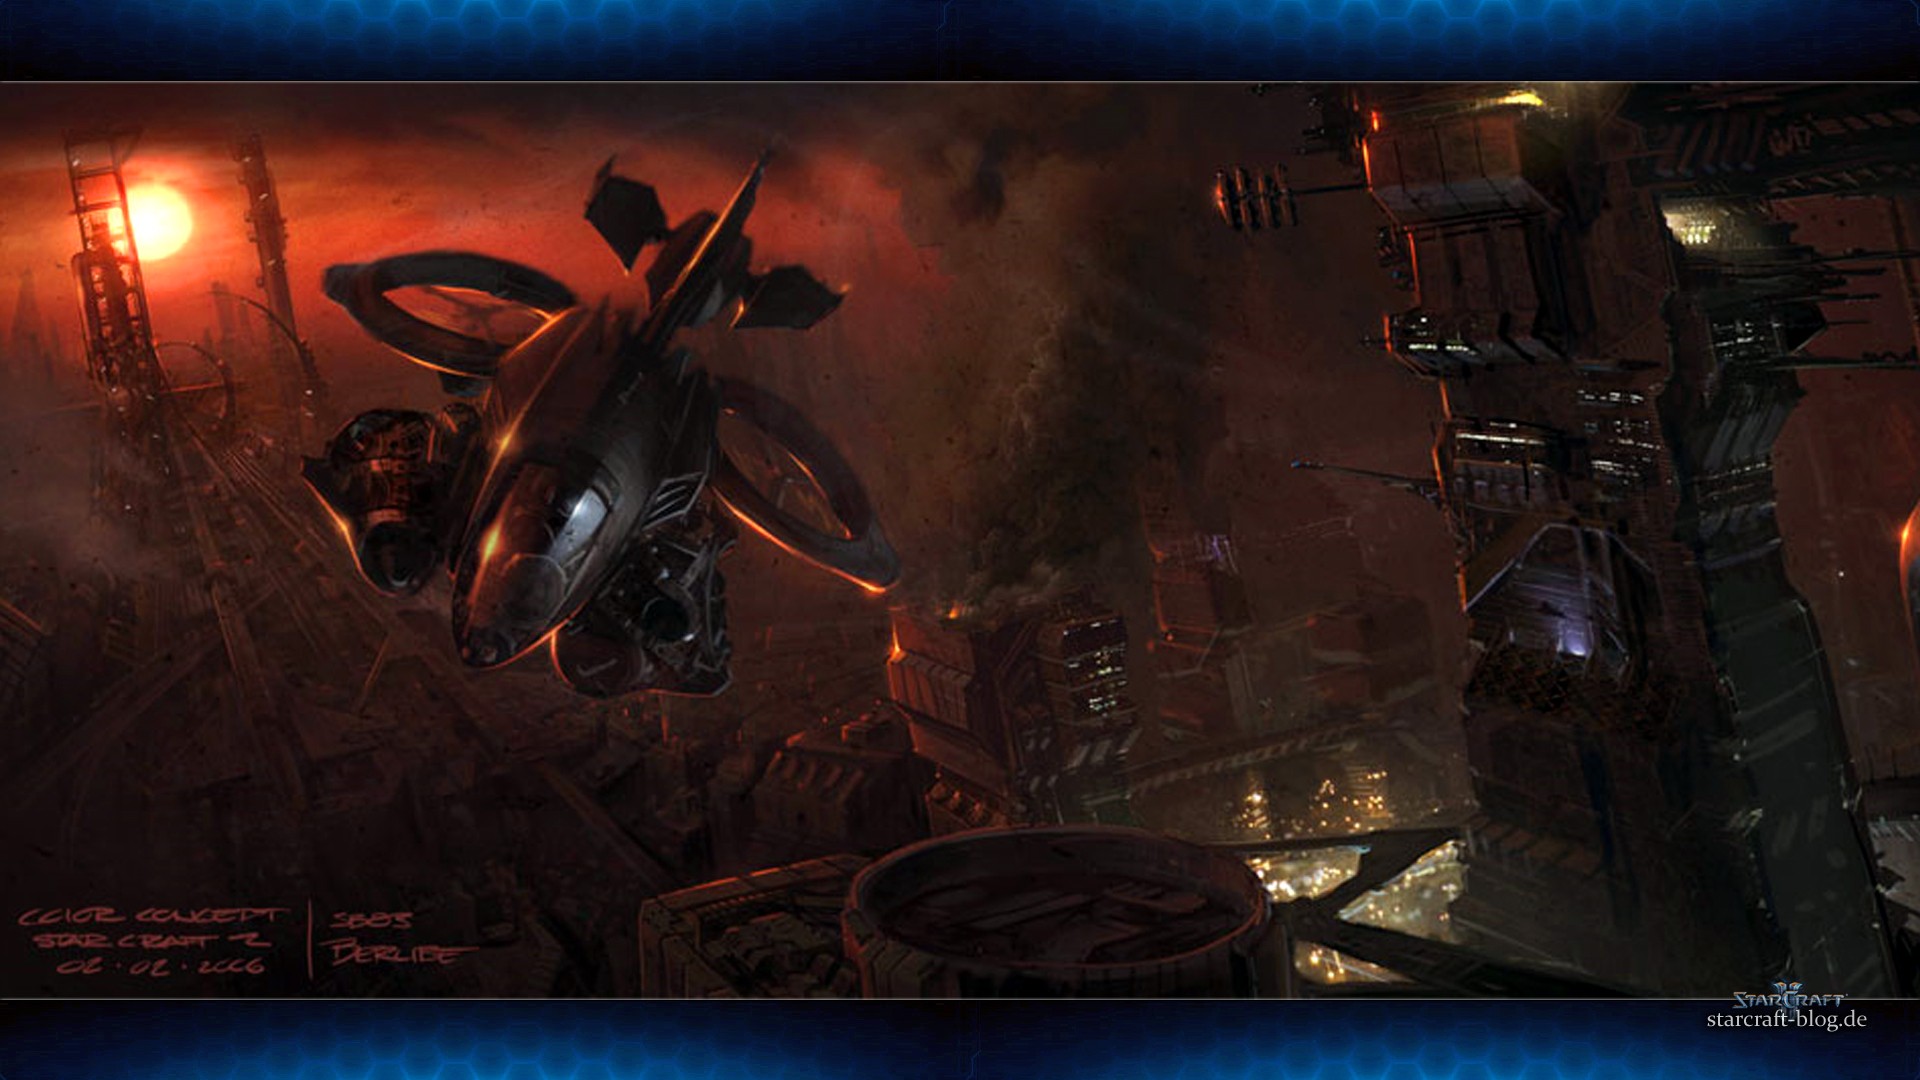 Starcraft Concept Art HD Wallpaper 279kb